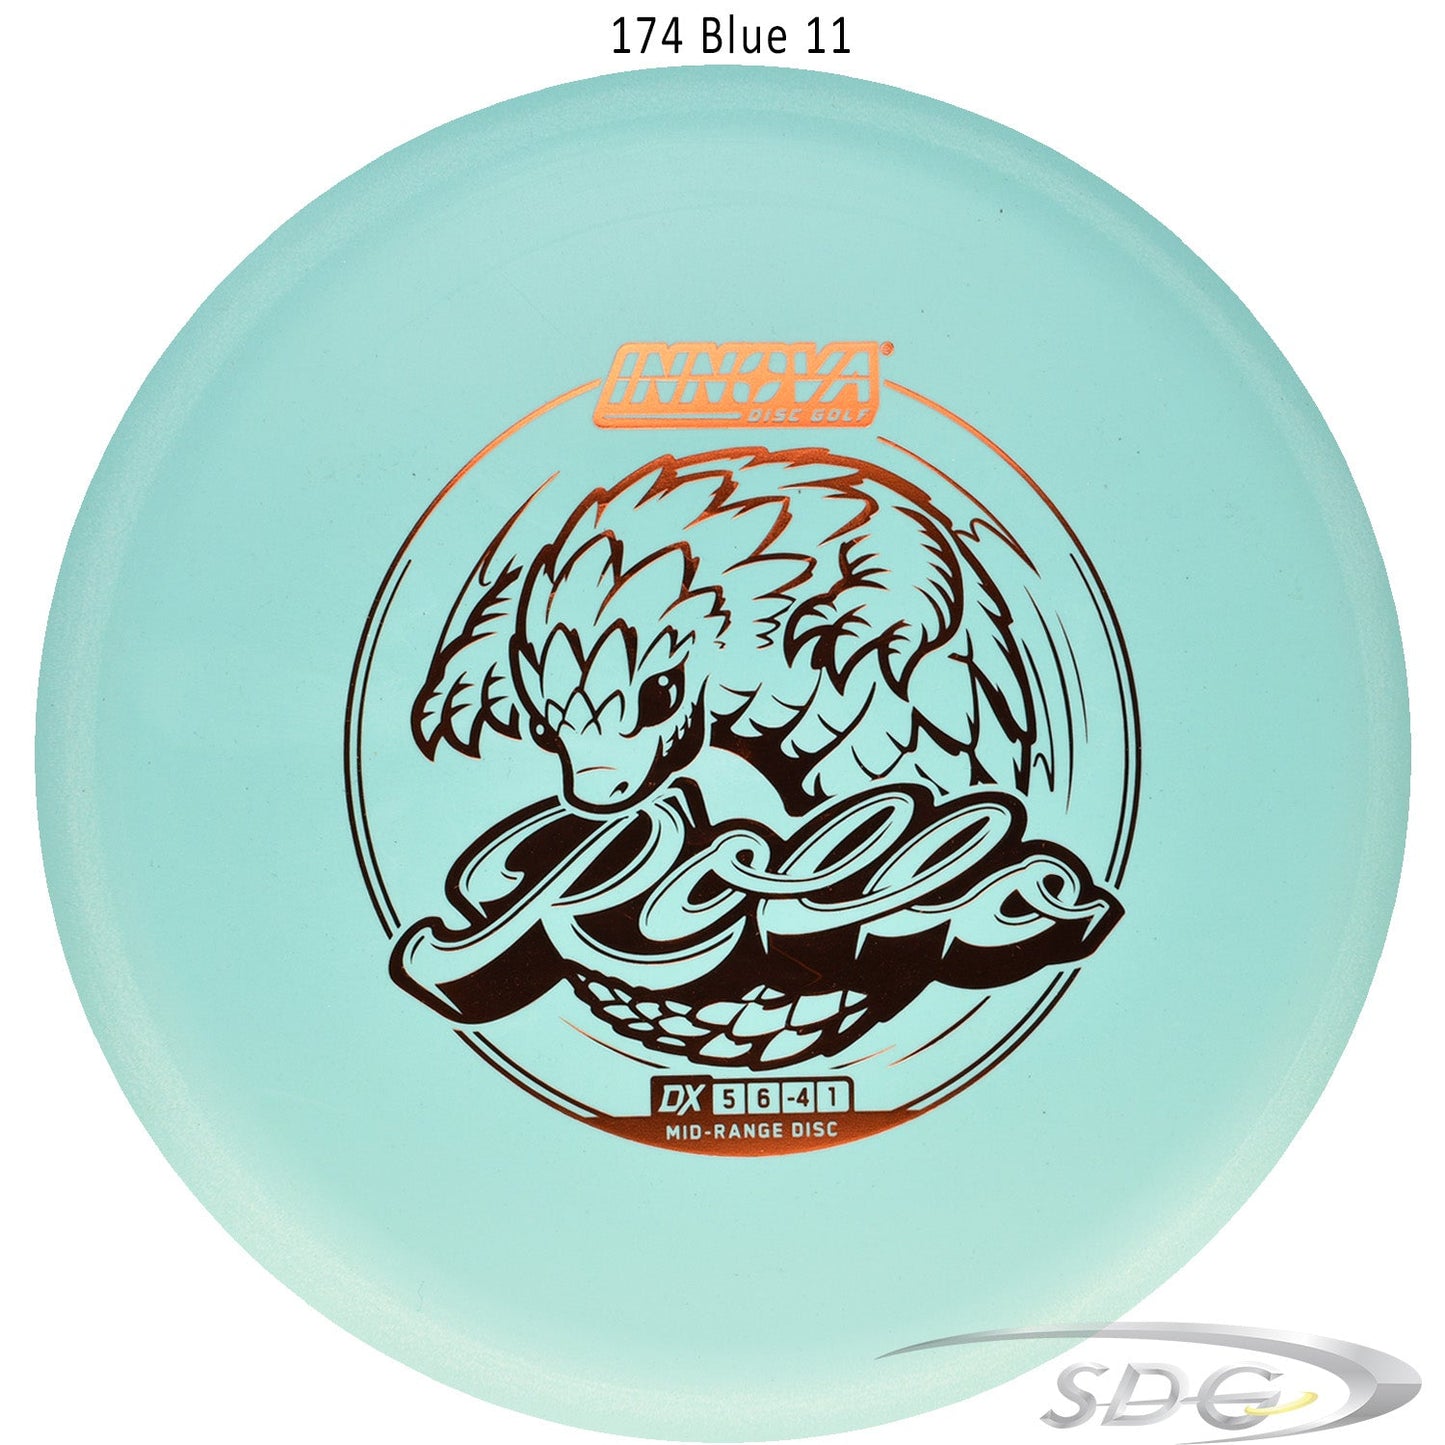 innova-dx-rollo-disc-golf-mid-range 174 Blue 11 